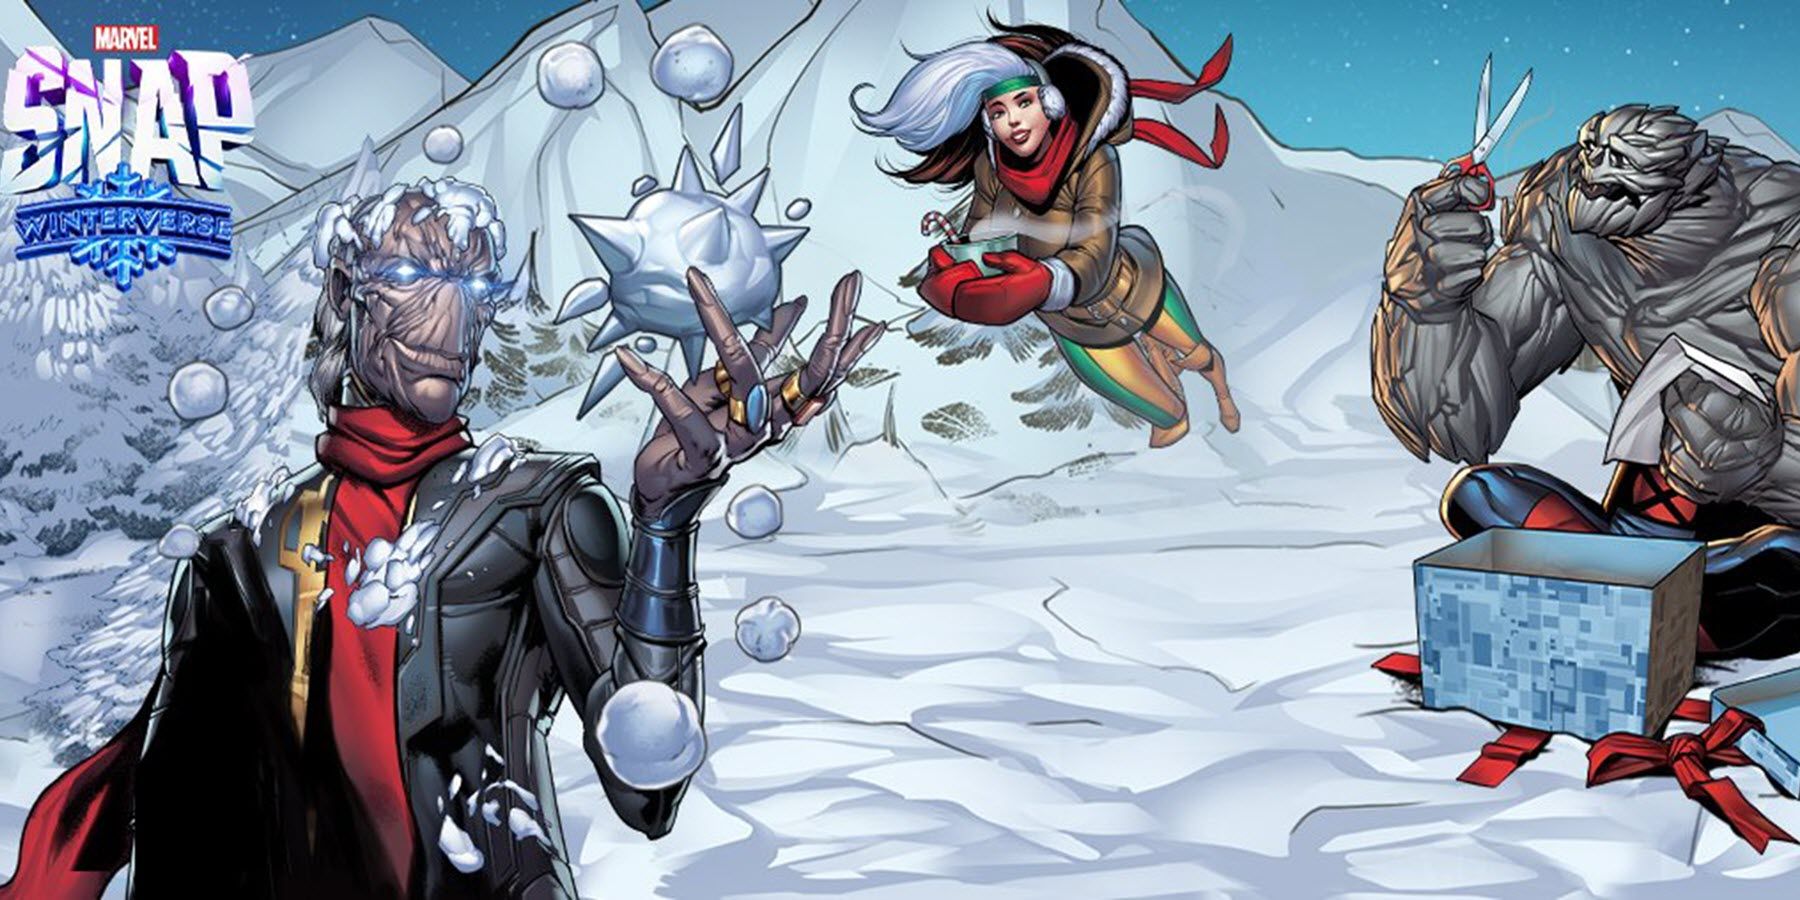 Marvel Snap Winterverse: Winter Variants, Bundle, & Rewards